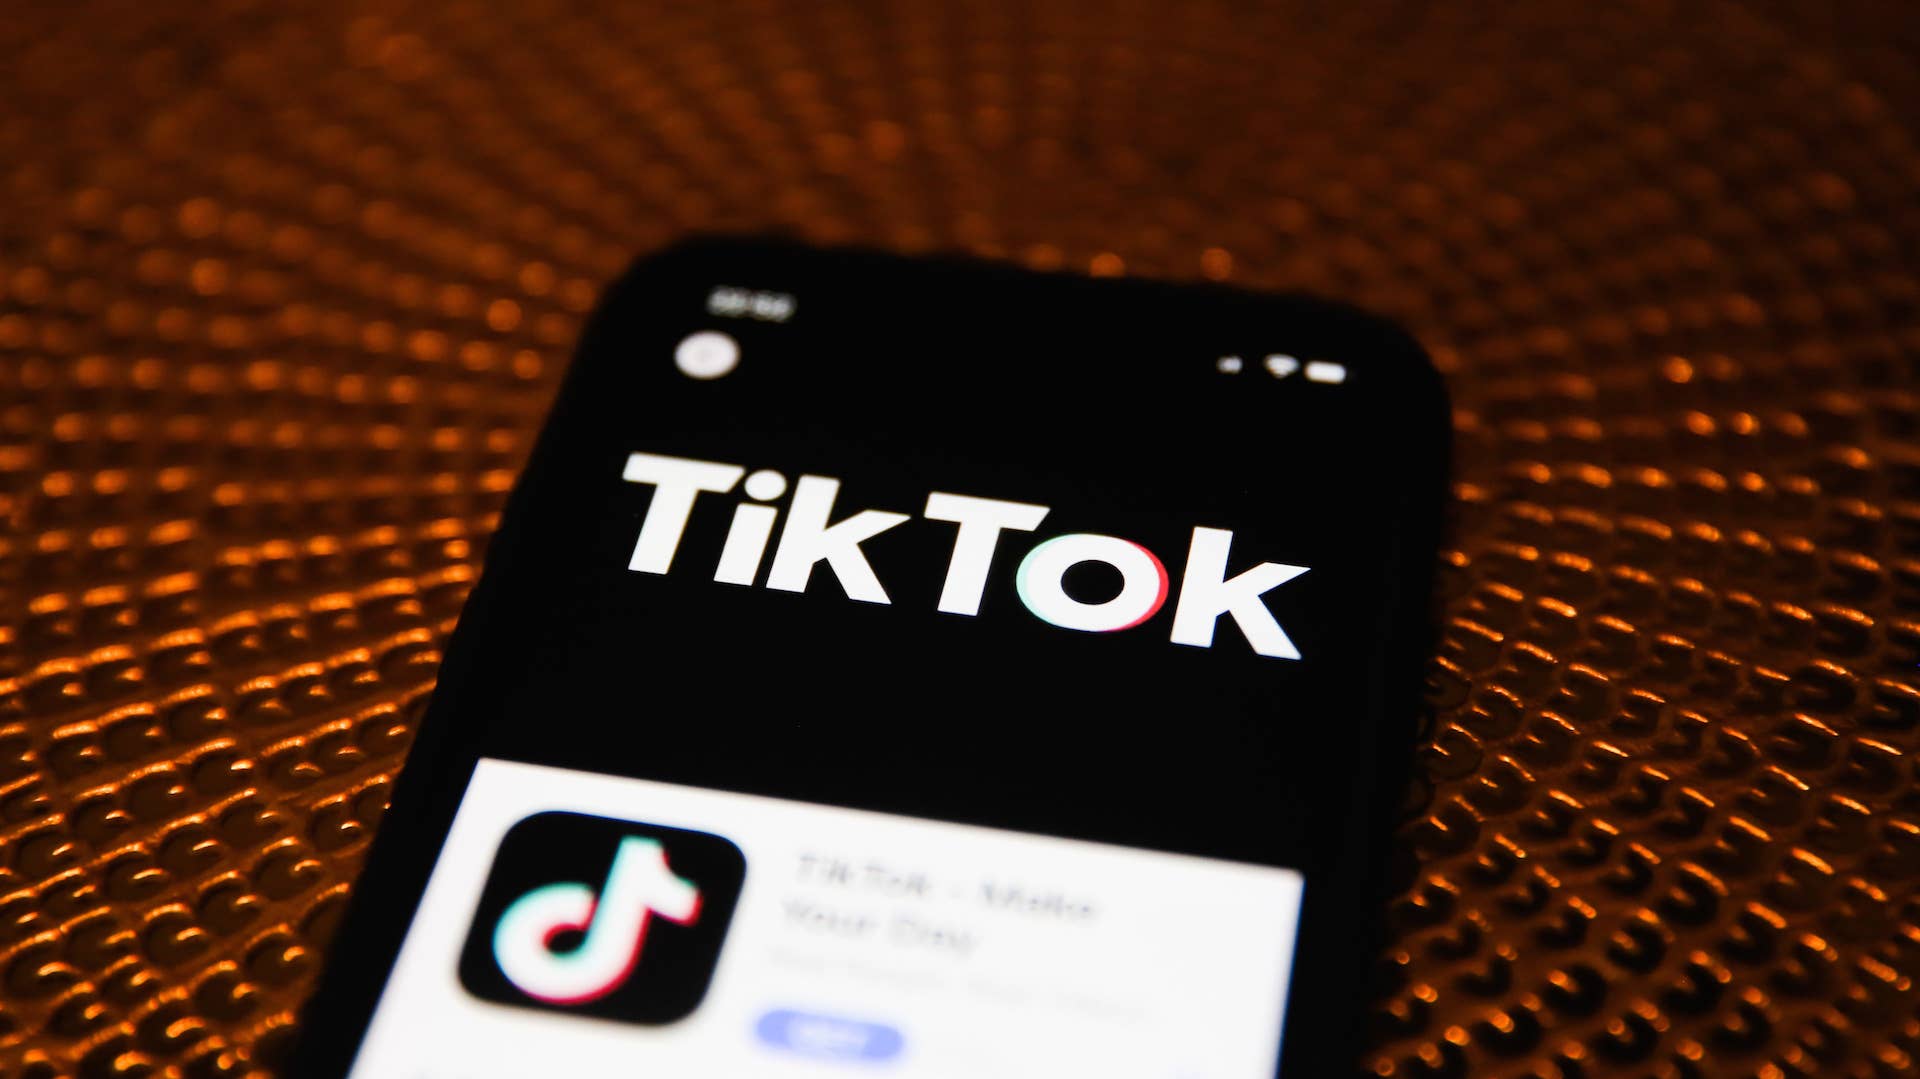 TikTok logo is seen displayed on phone screen